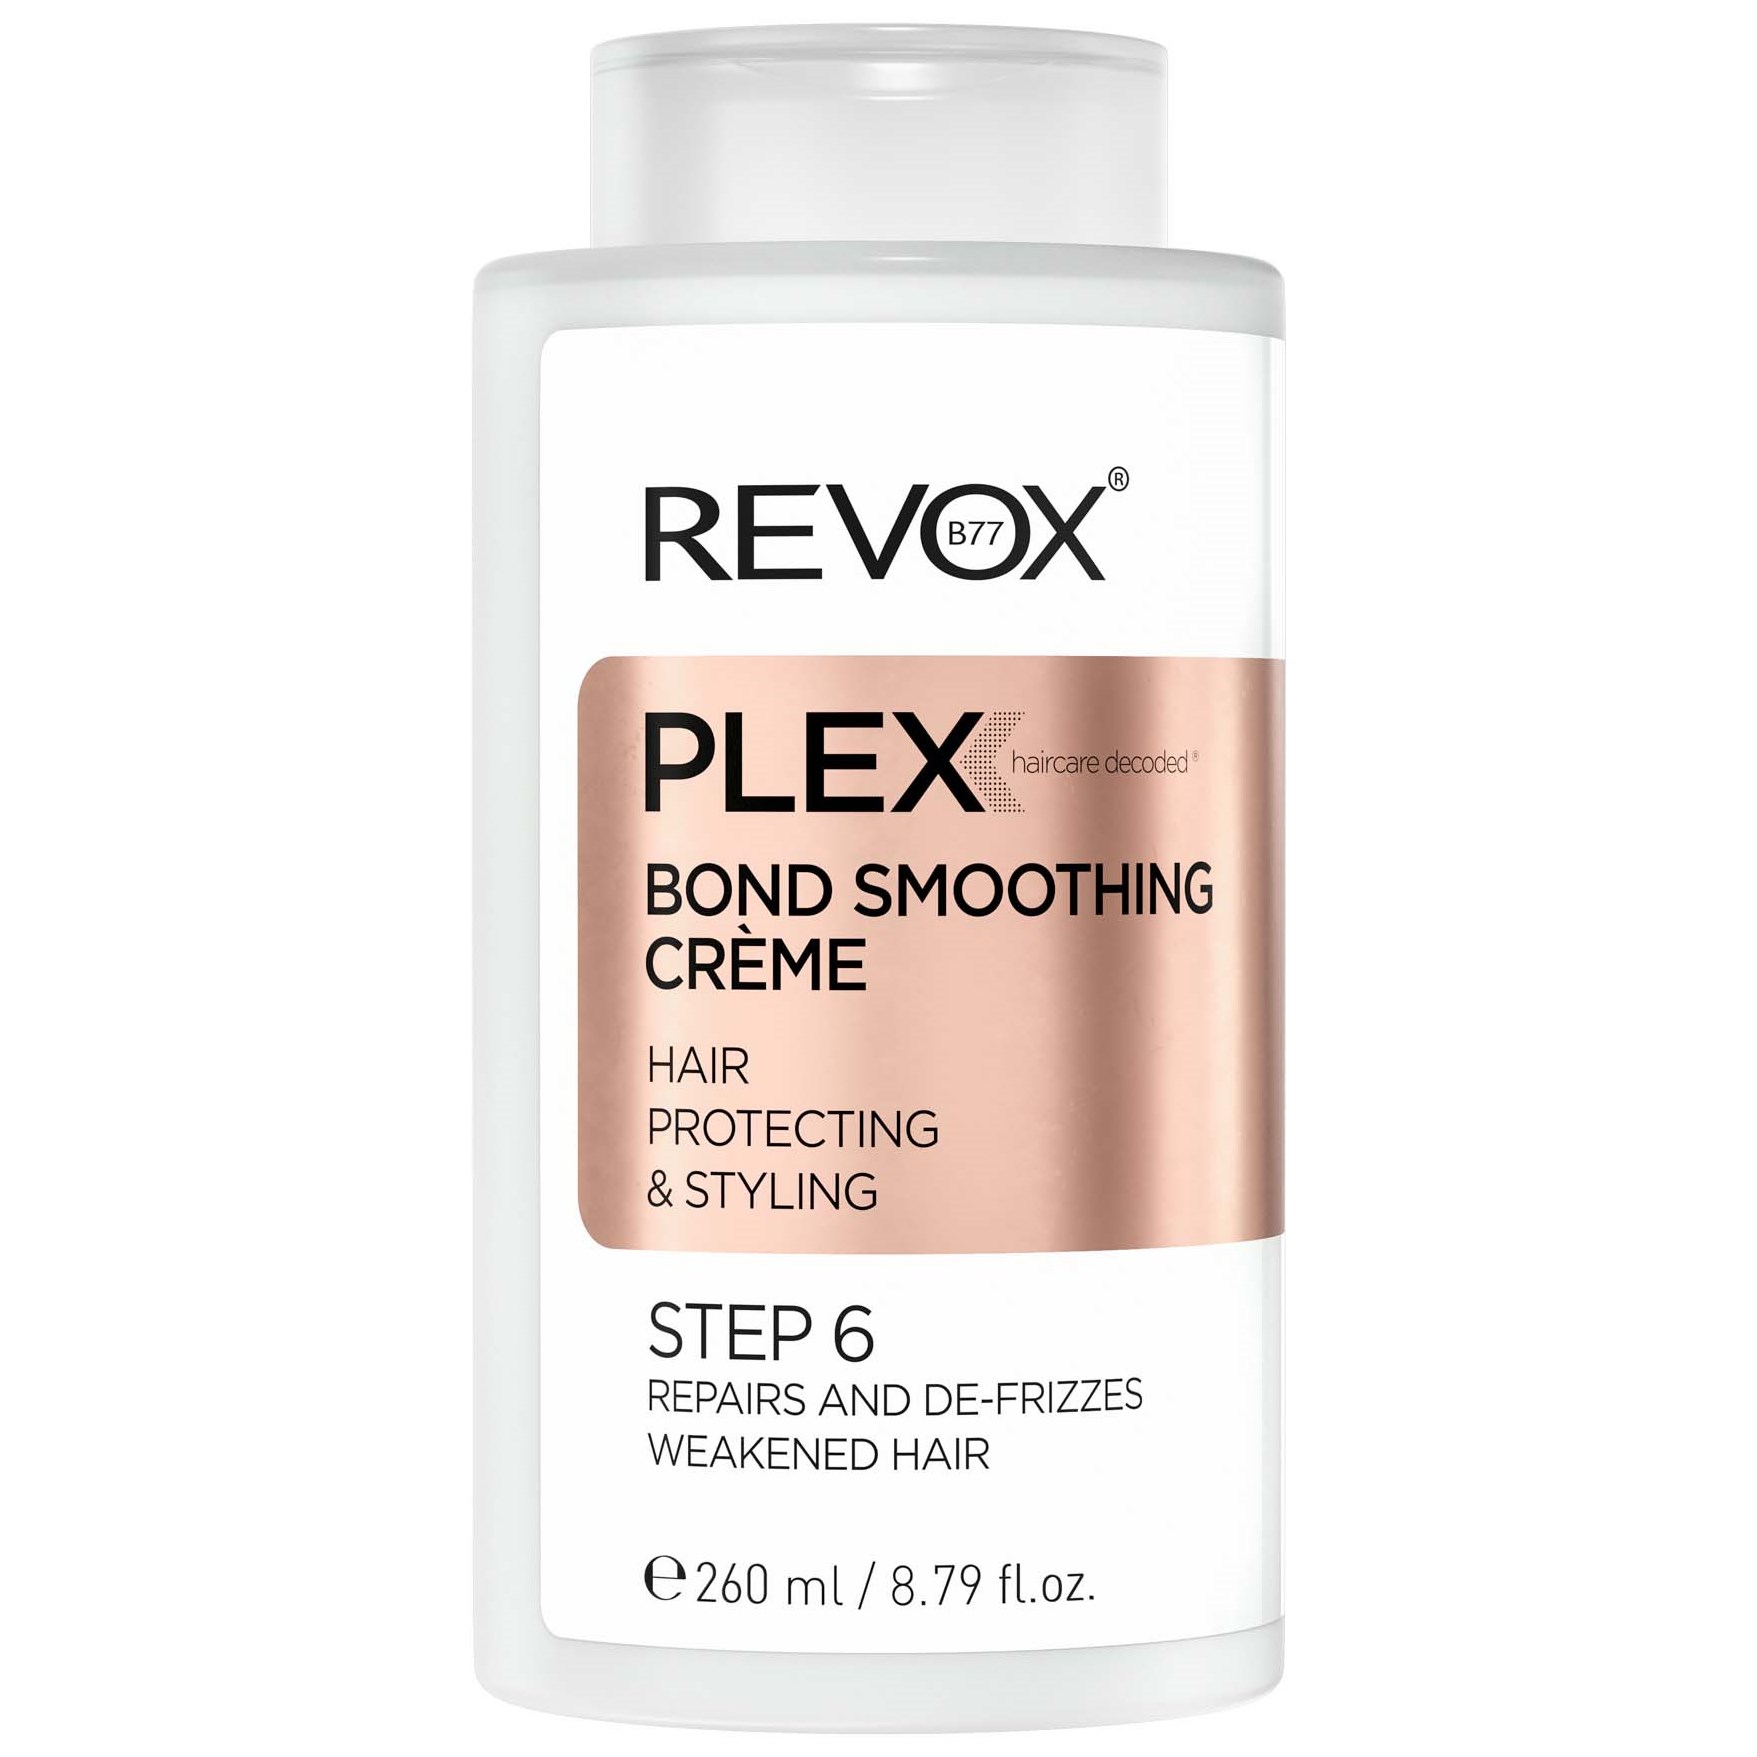 Läs mer om Revox Plex REVOX B77 Bond Smoothing Crème Step 6 260 ml